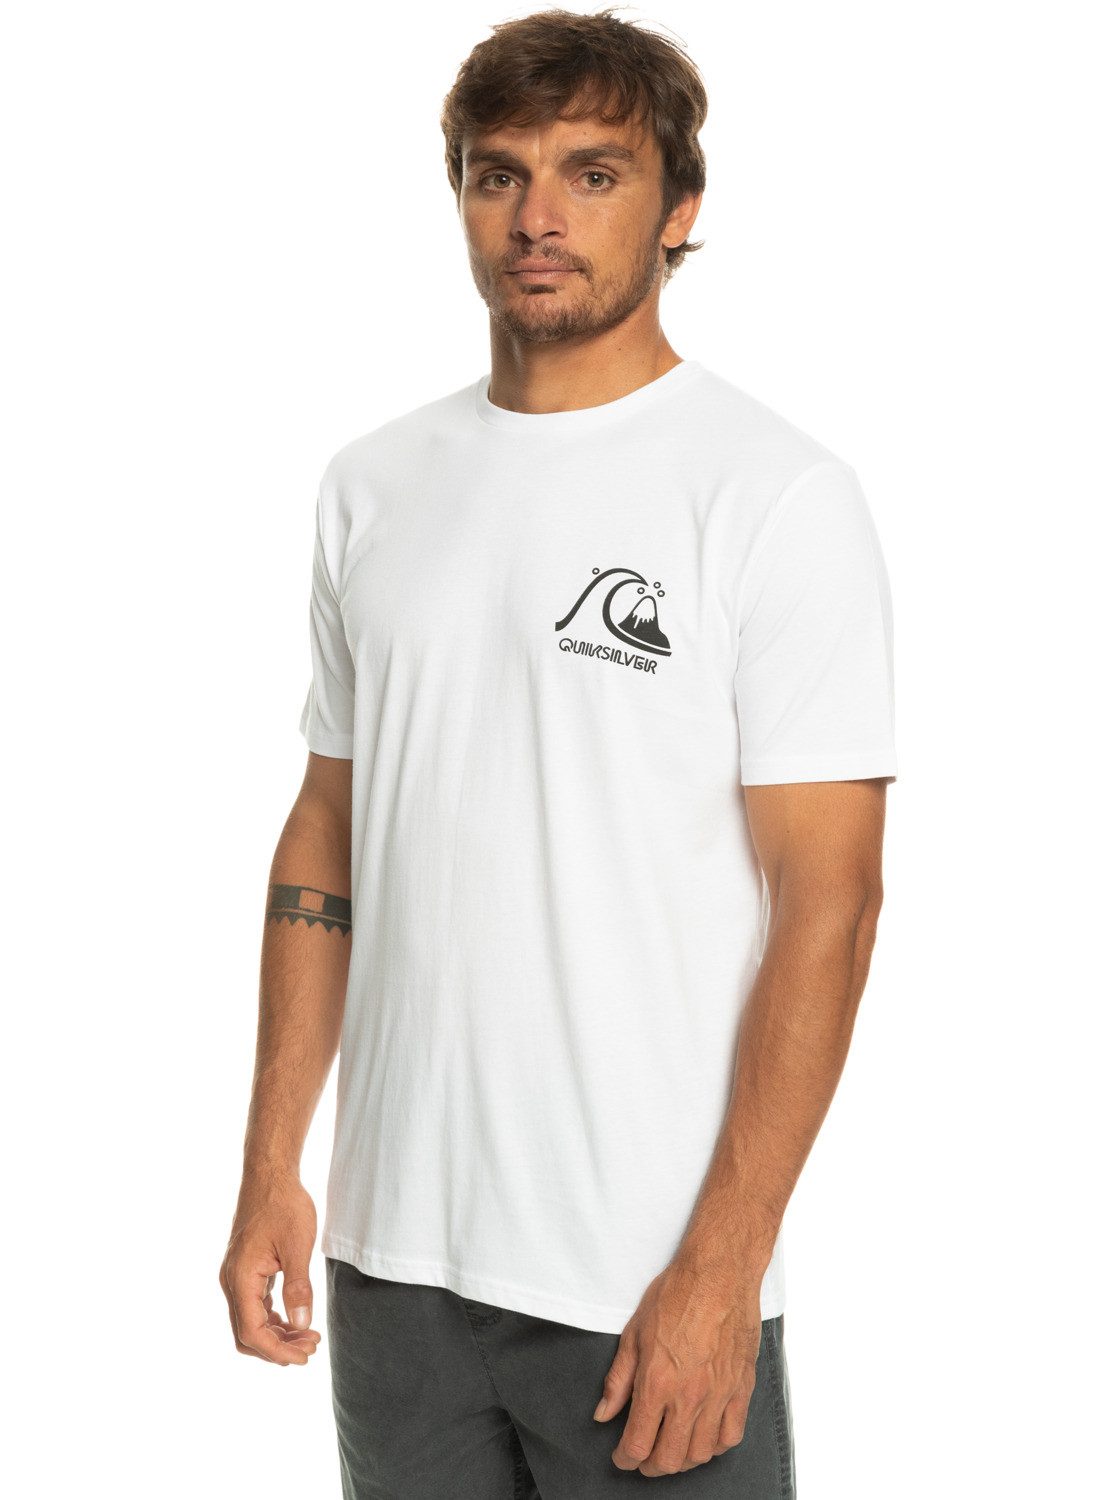 White T-Shirt Quiksilver Original The